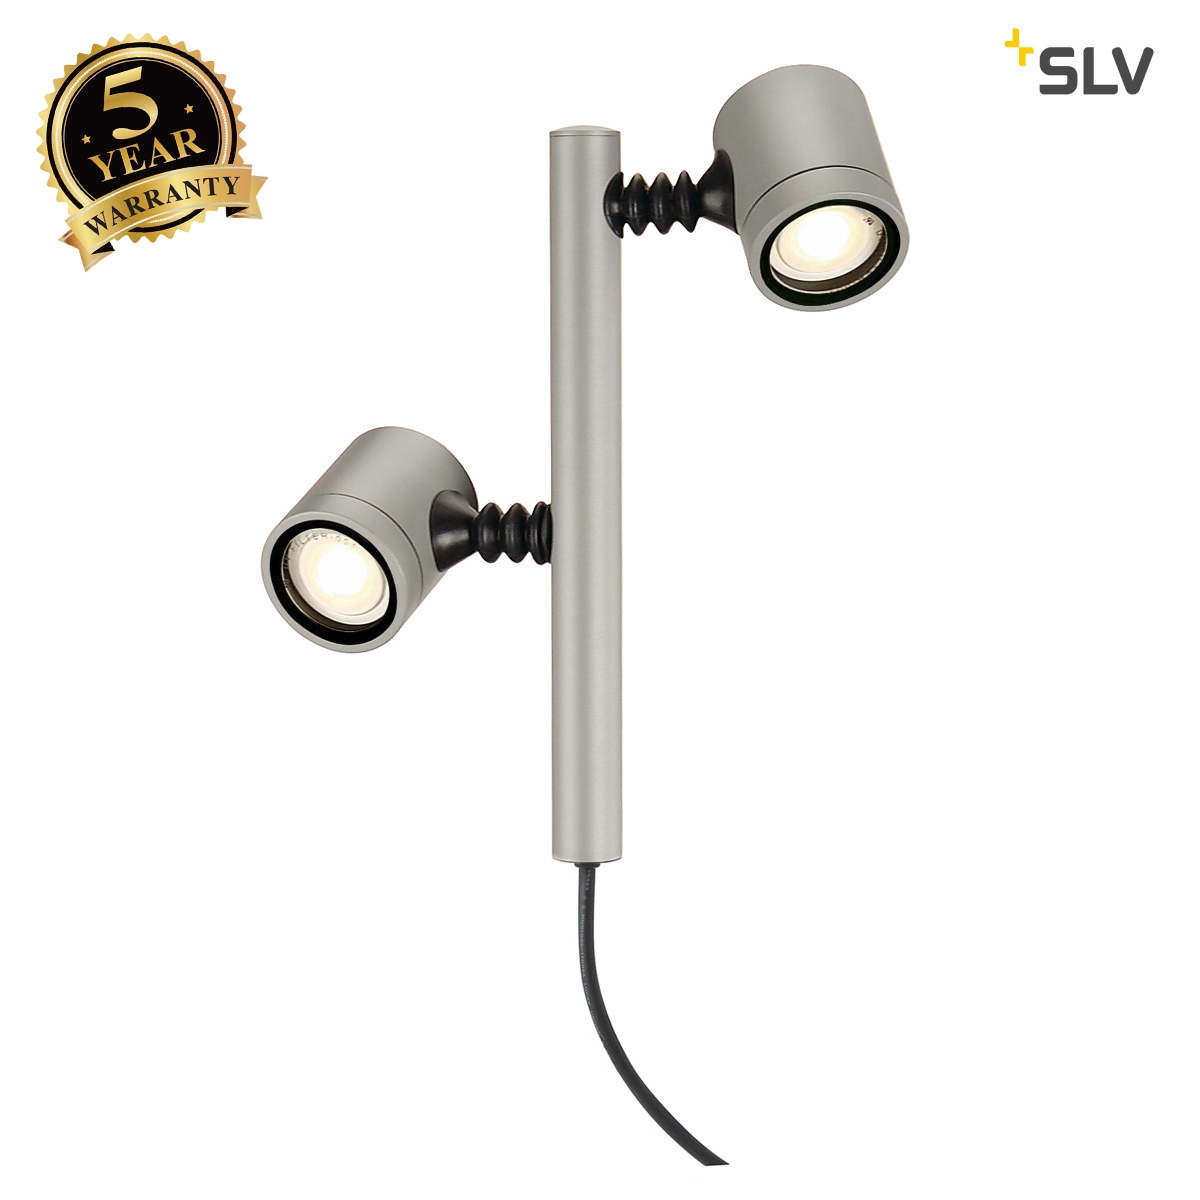 SLV NEW MYRA 2 lamp head, silver-grey, 2x GU10, max. 2x 4W, IP44 233184